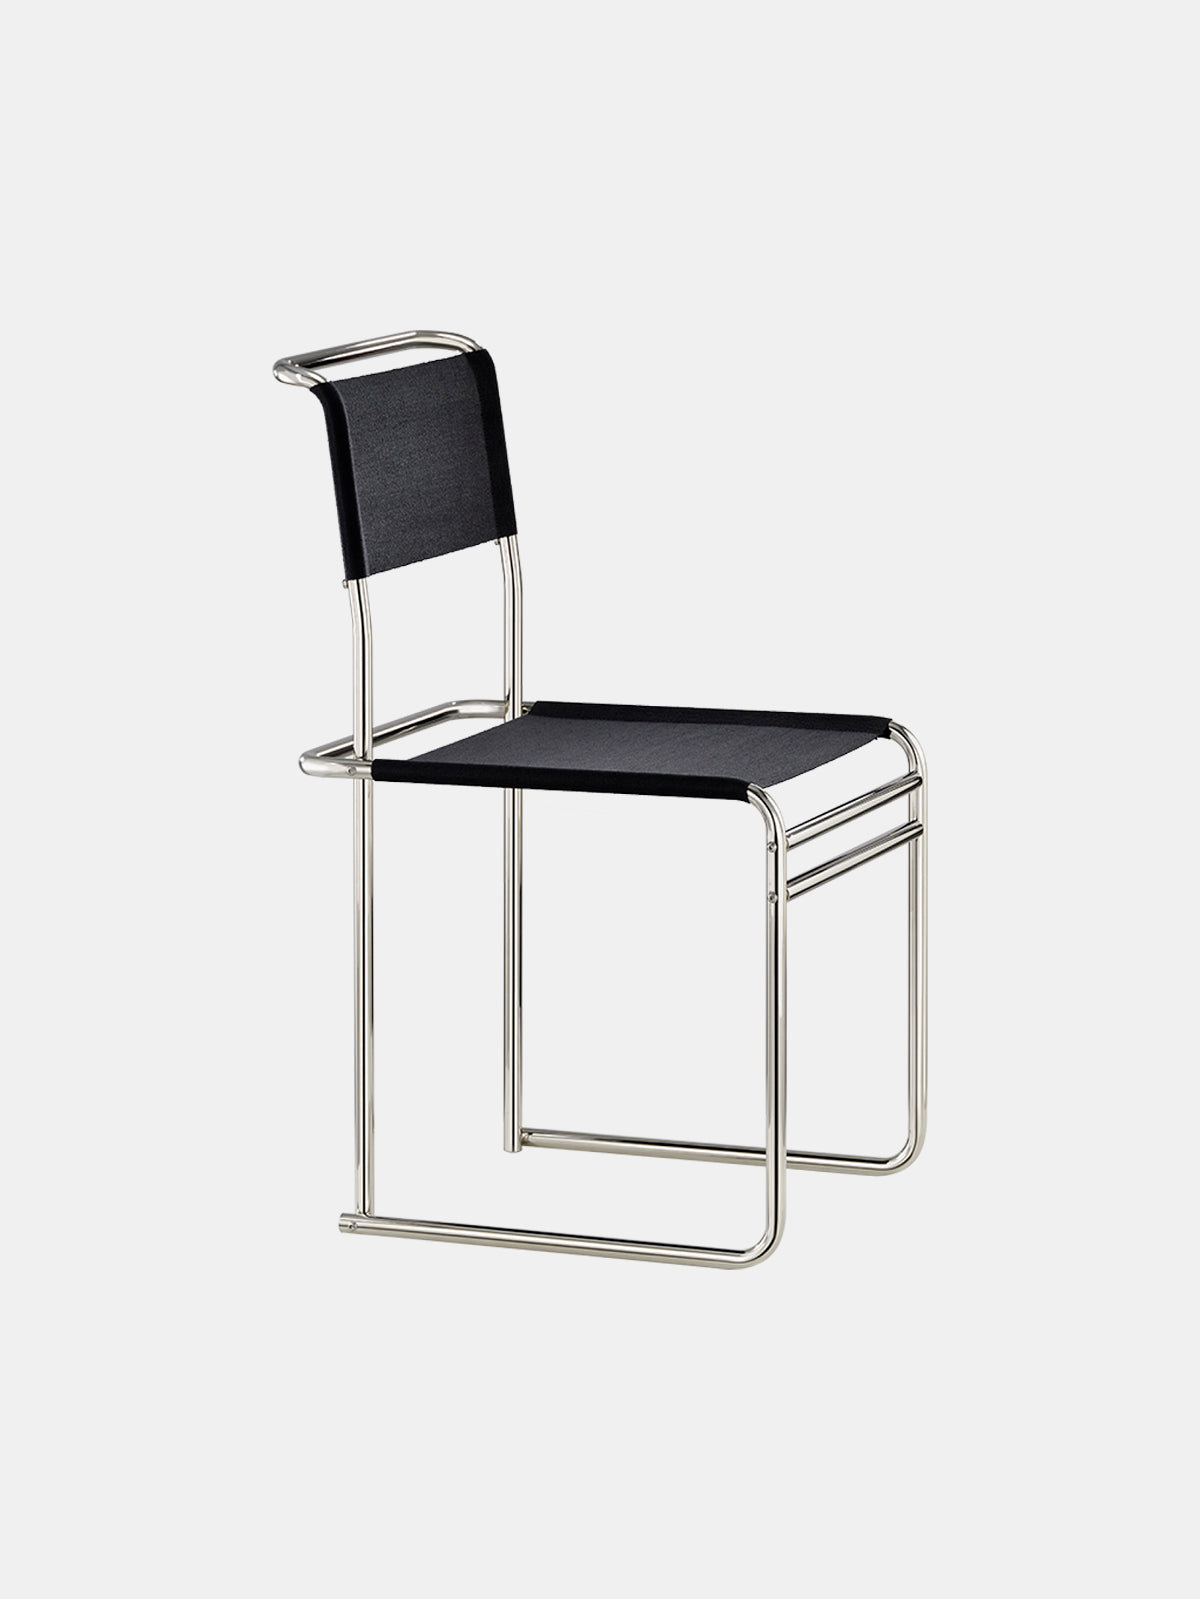 B40 Chair designed by Marcel Breuer